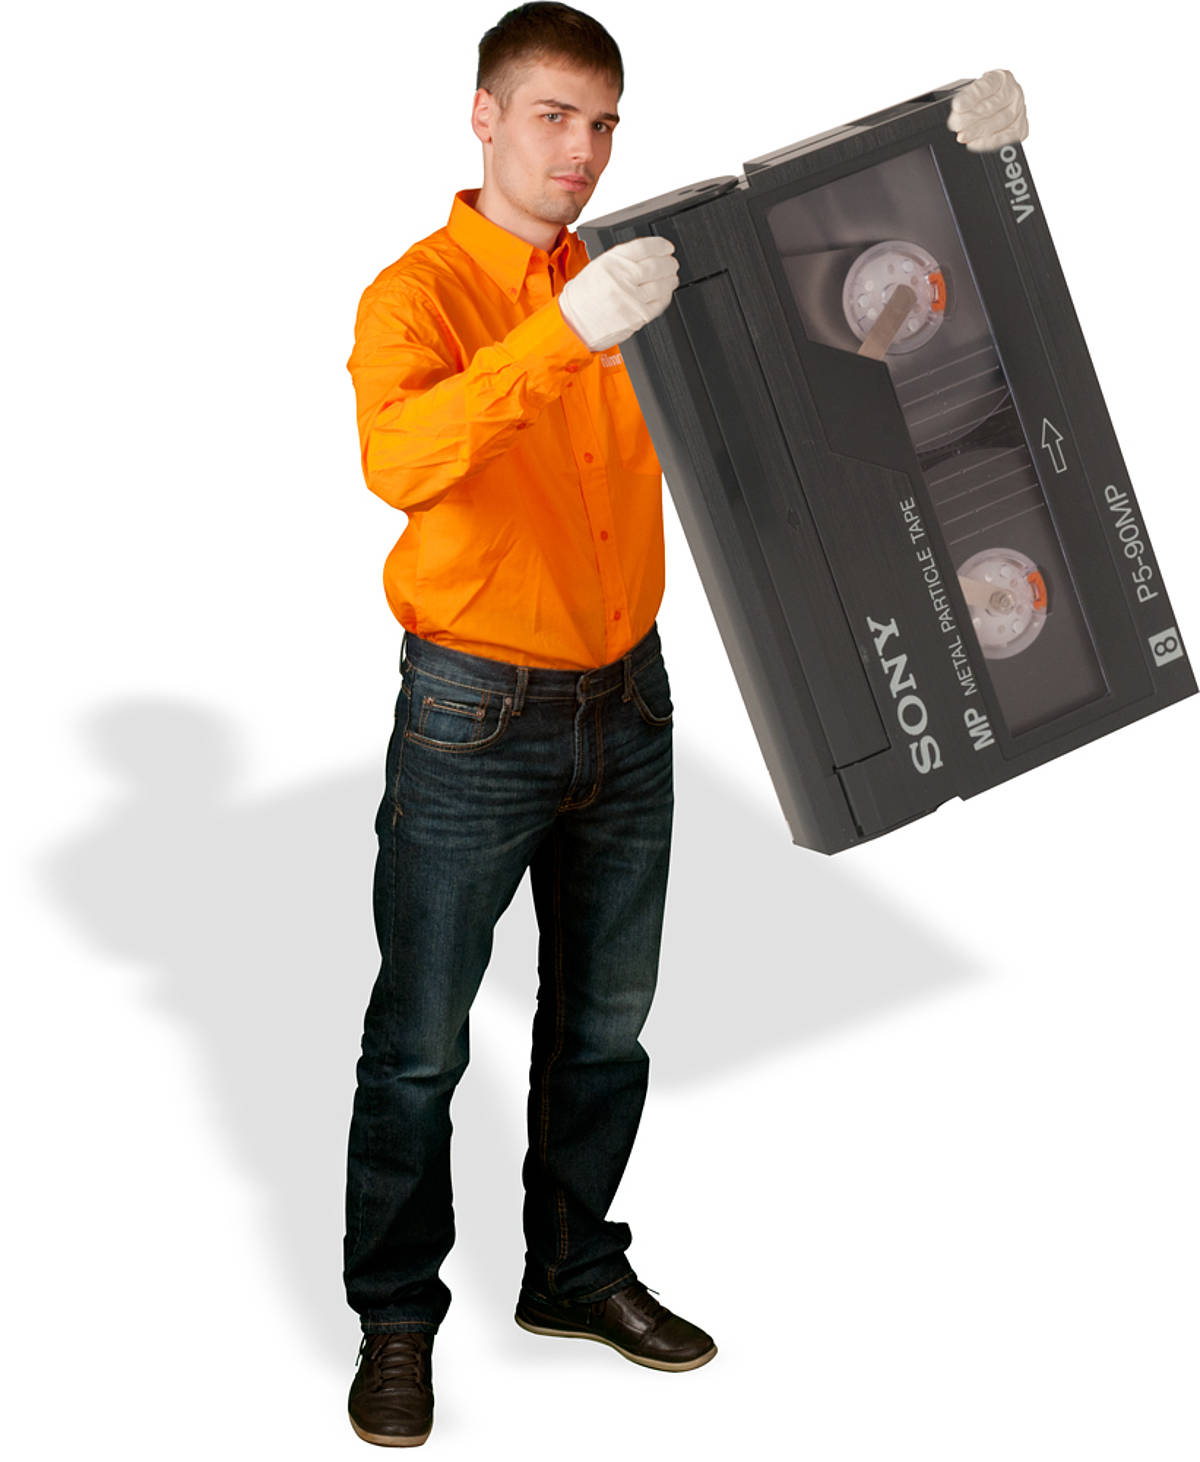 Kassetten digitalisieren bei den Film-Rettern